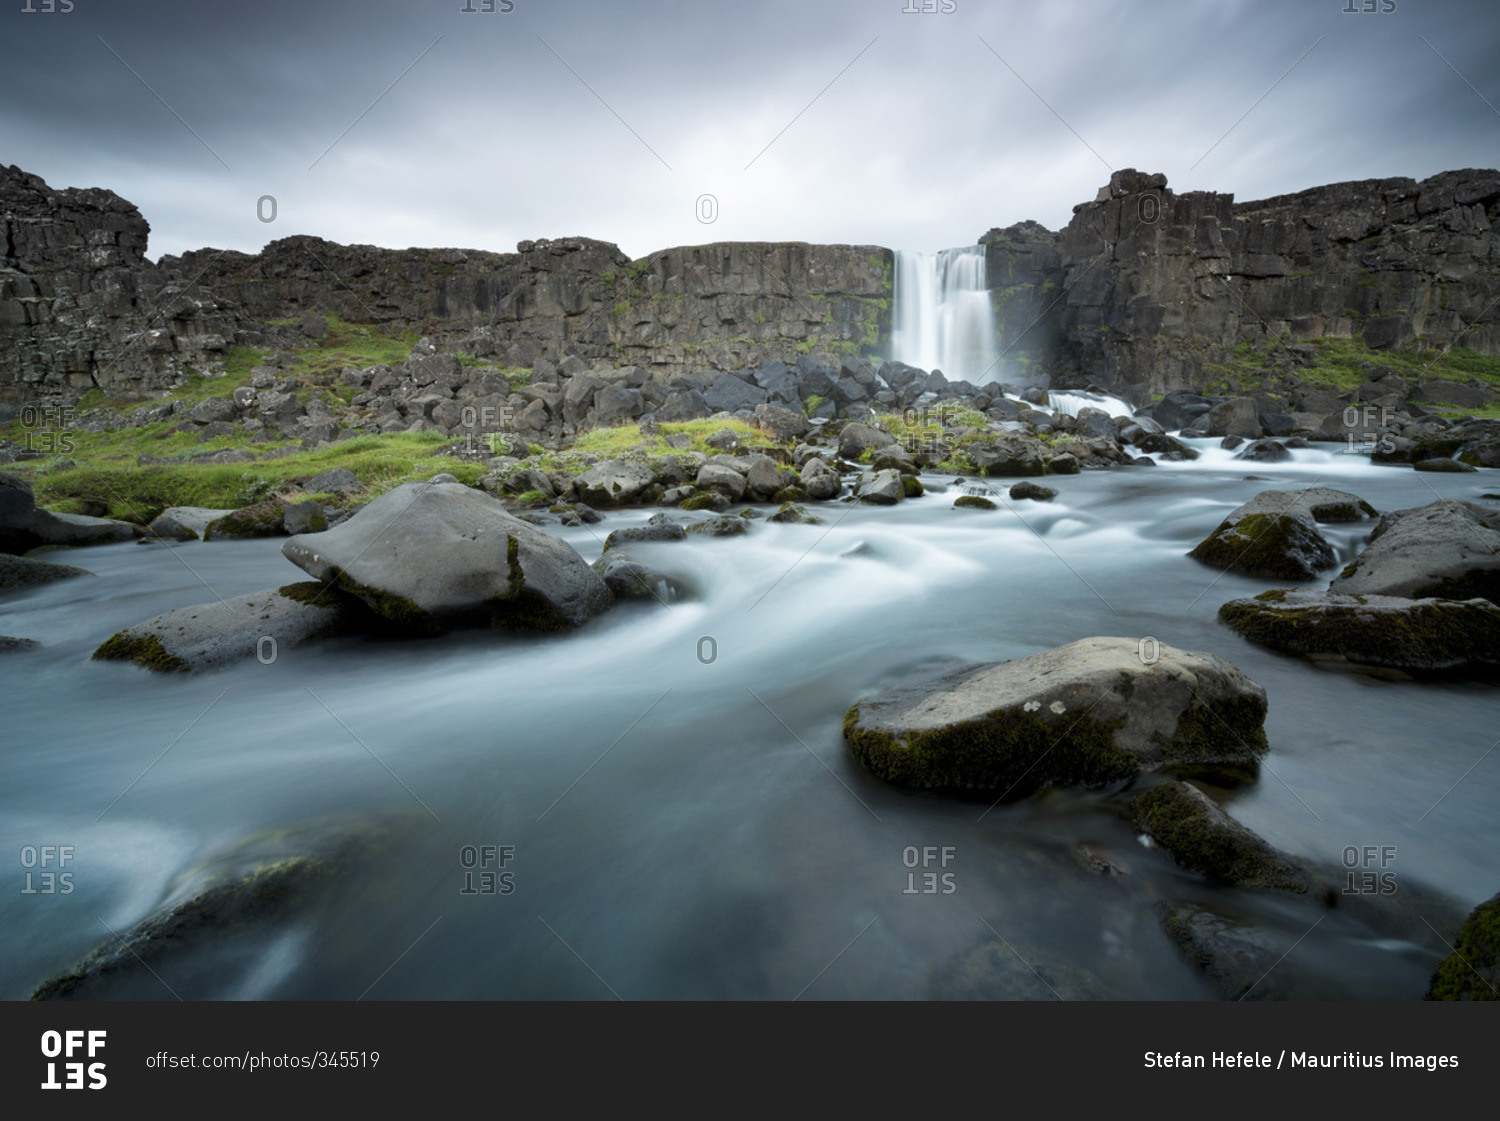 _xar_rfoss waterfall in Thingvellir National Park, Iceland